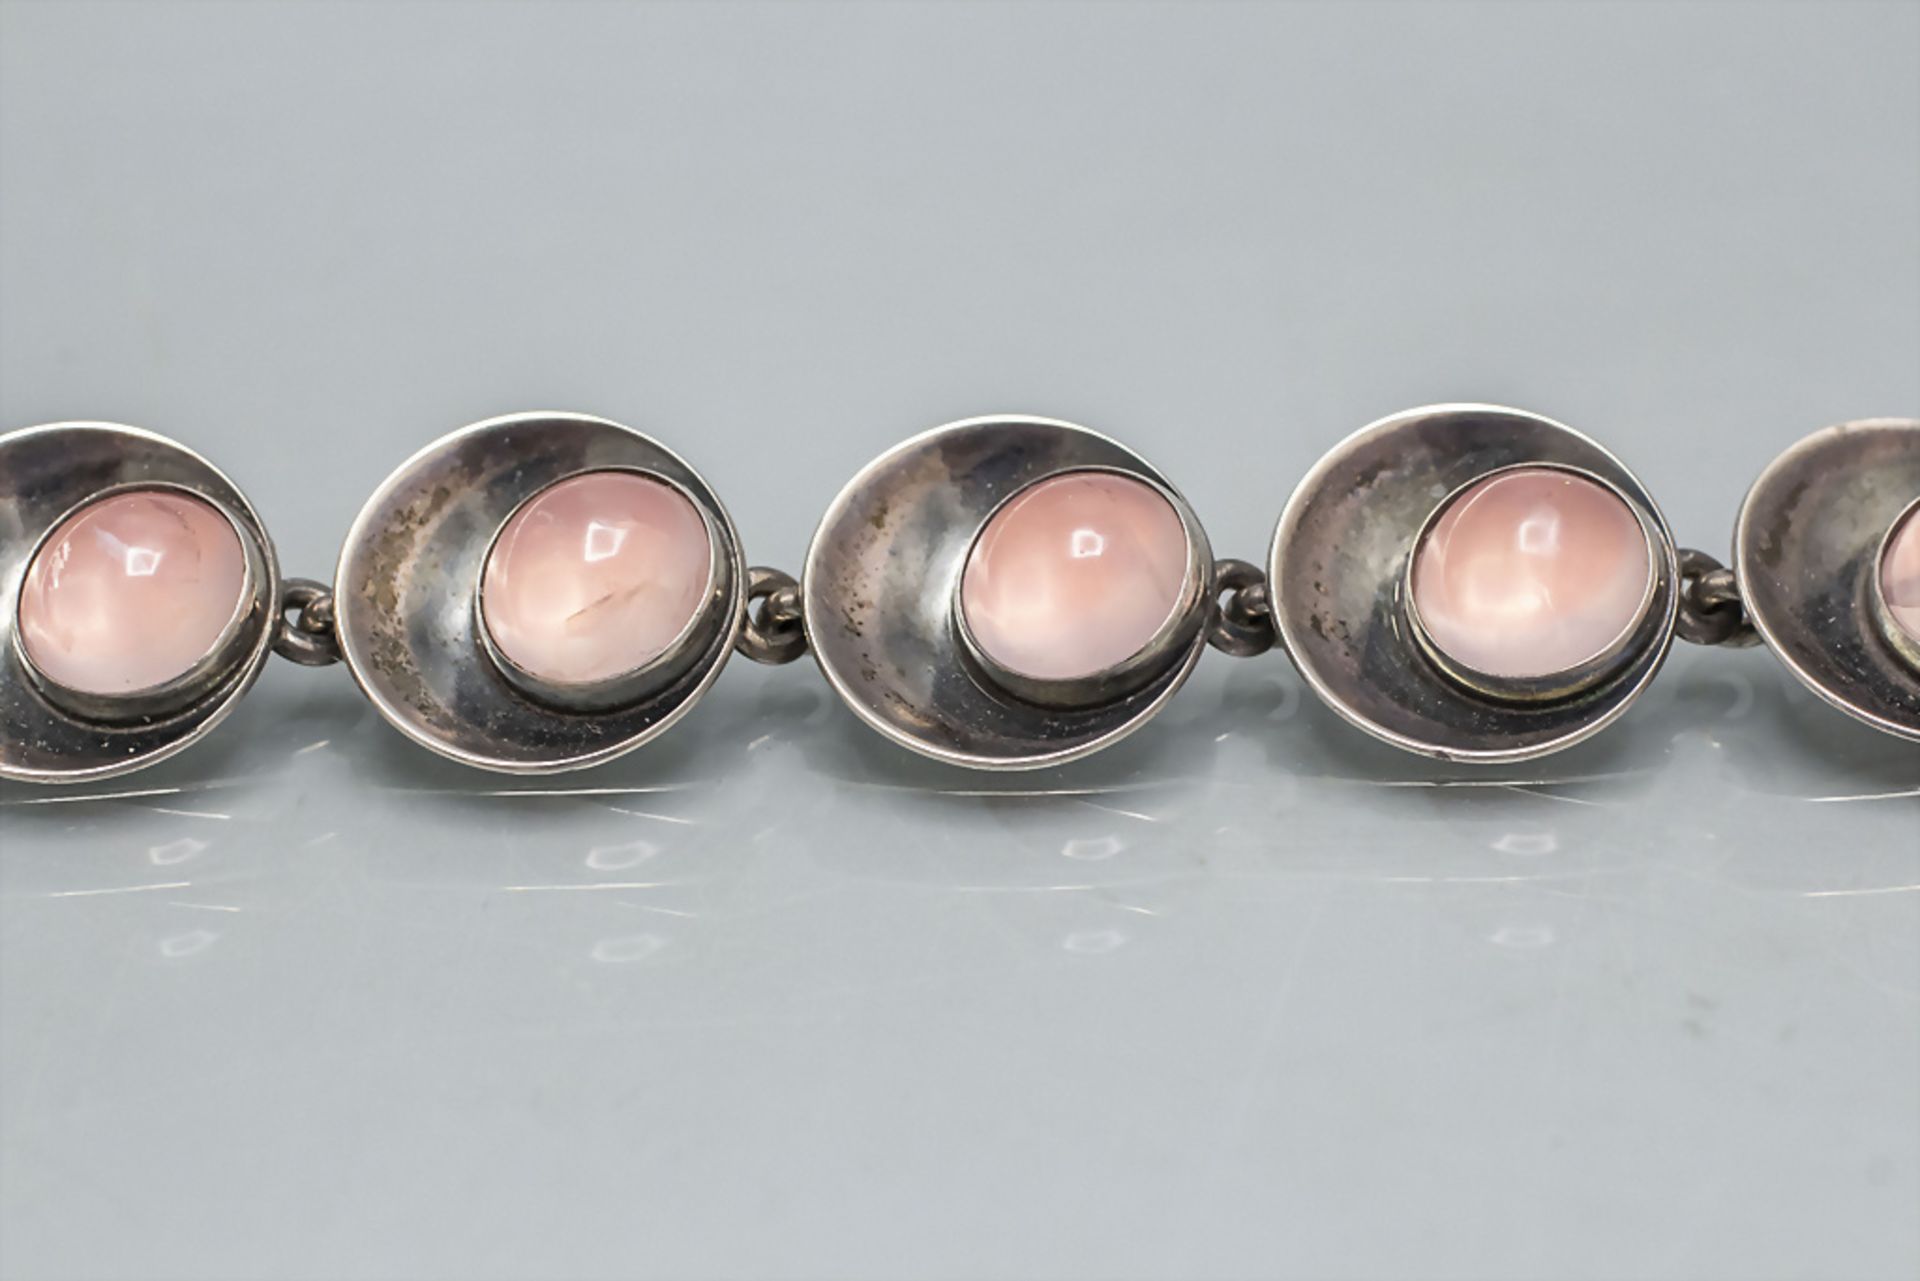 Silber Armband mit Rosenquarz / A silver bracelet with rose quartz, Nils Erik From, Dänemark, ... - Bild 3 aus 5